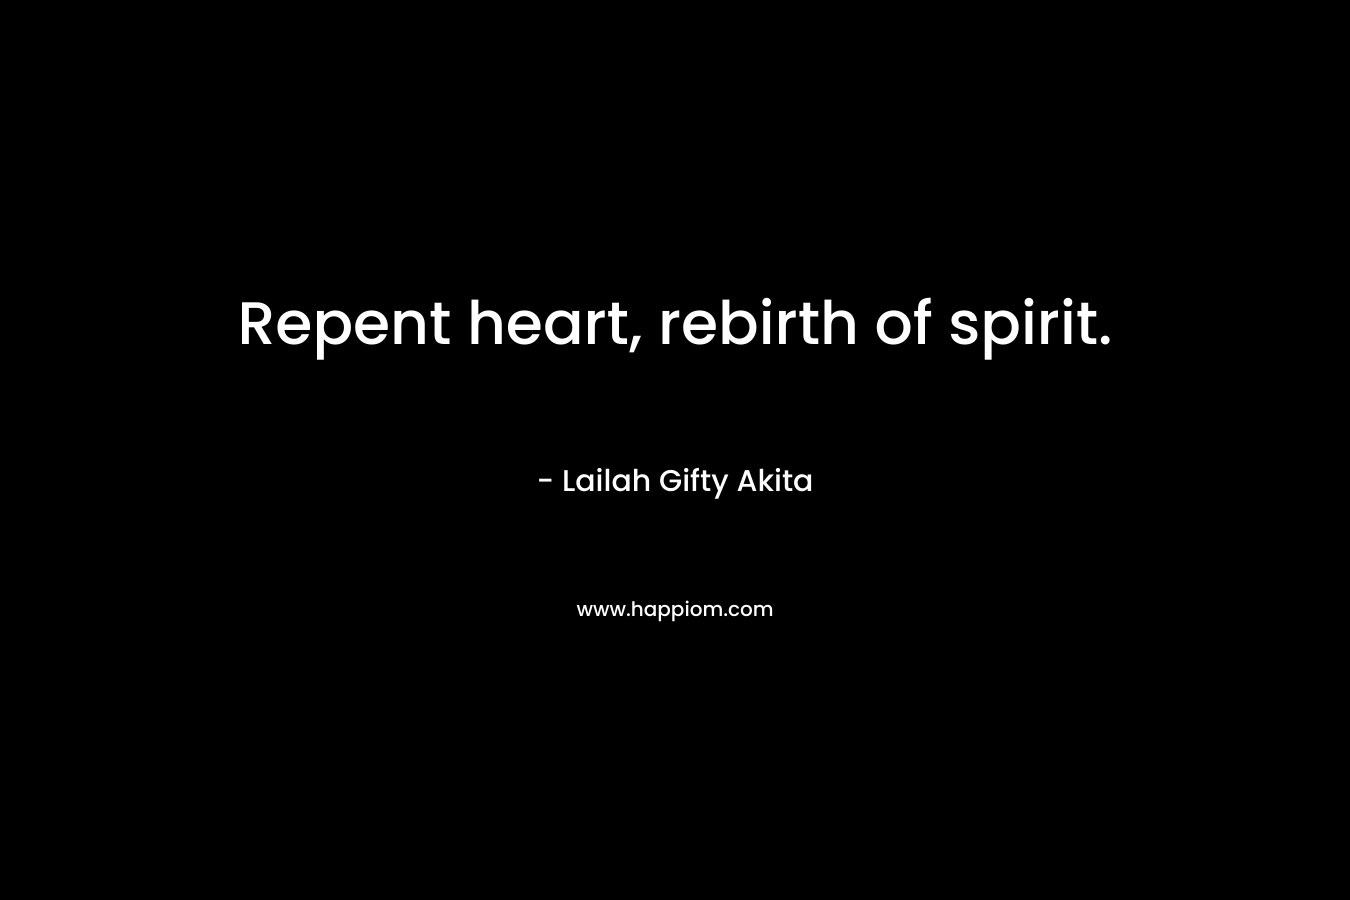 Repent heart, rebirth of spirit.